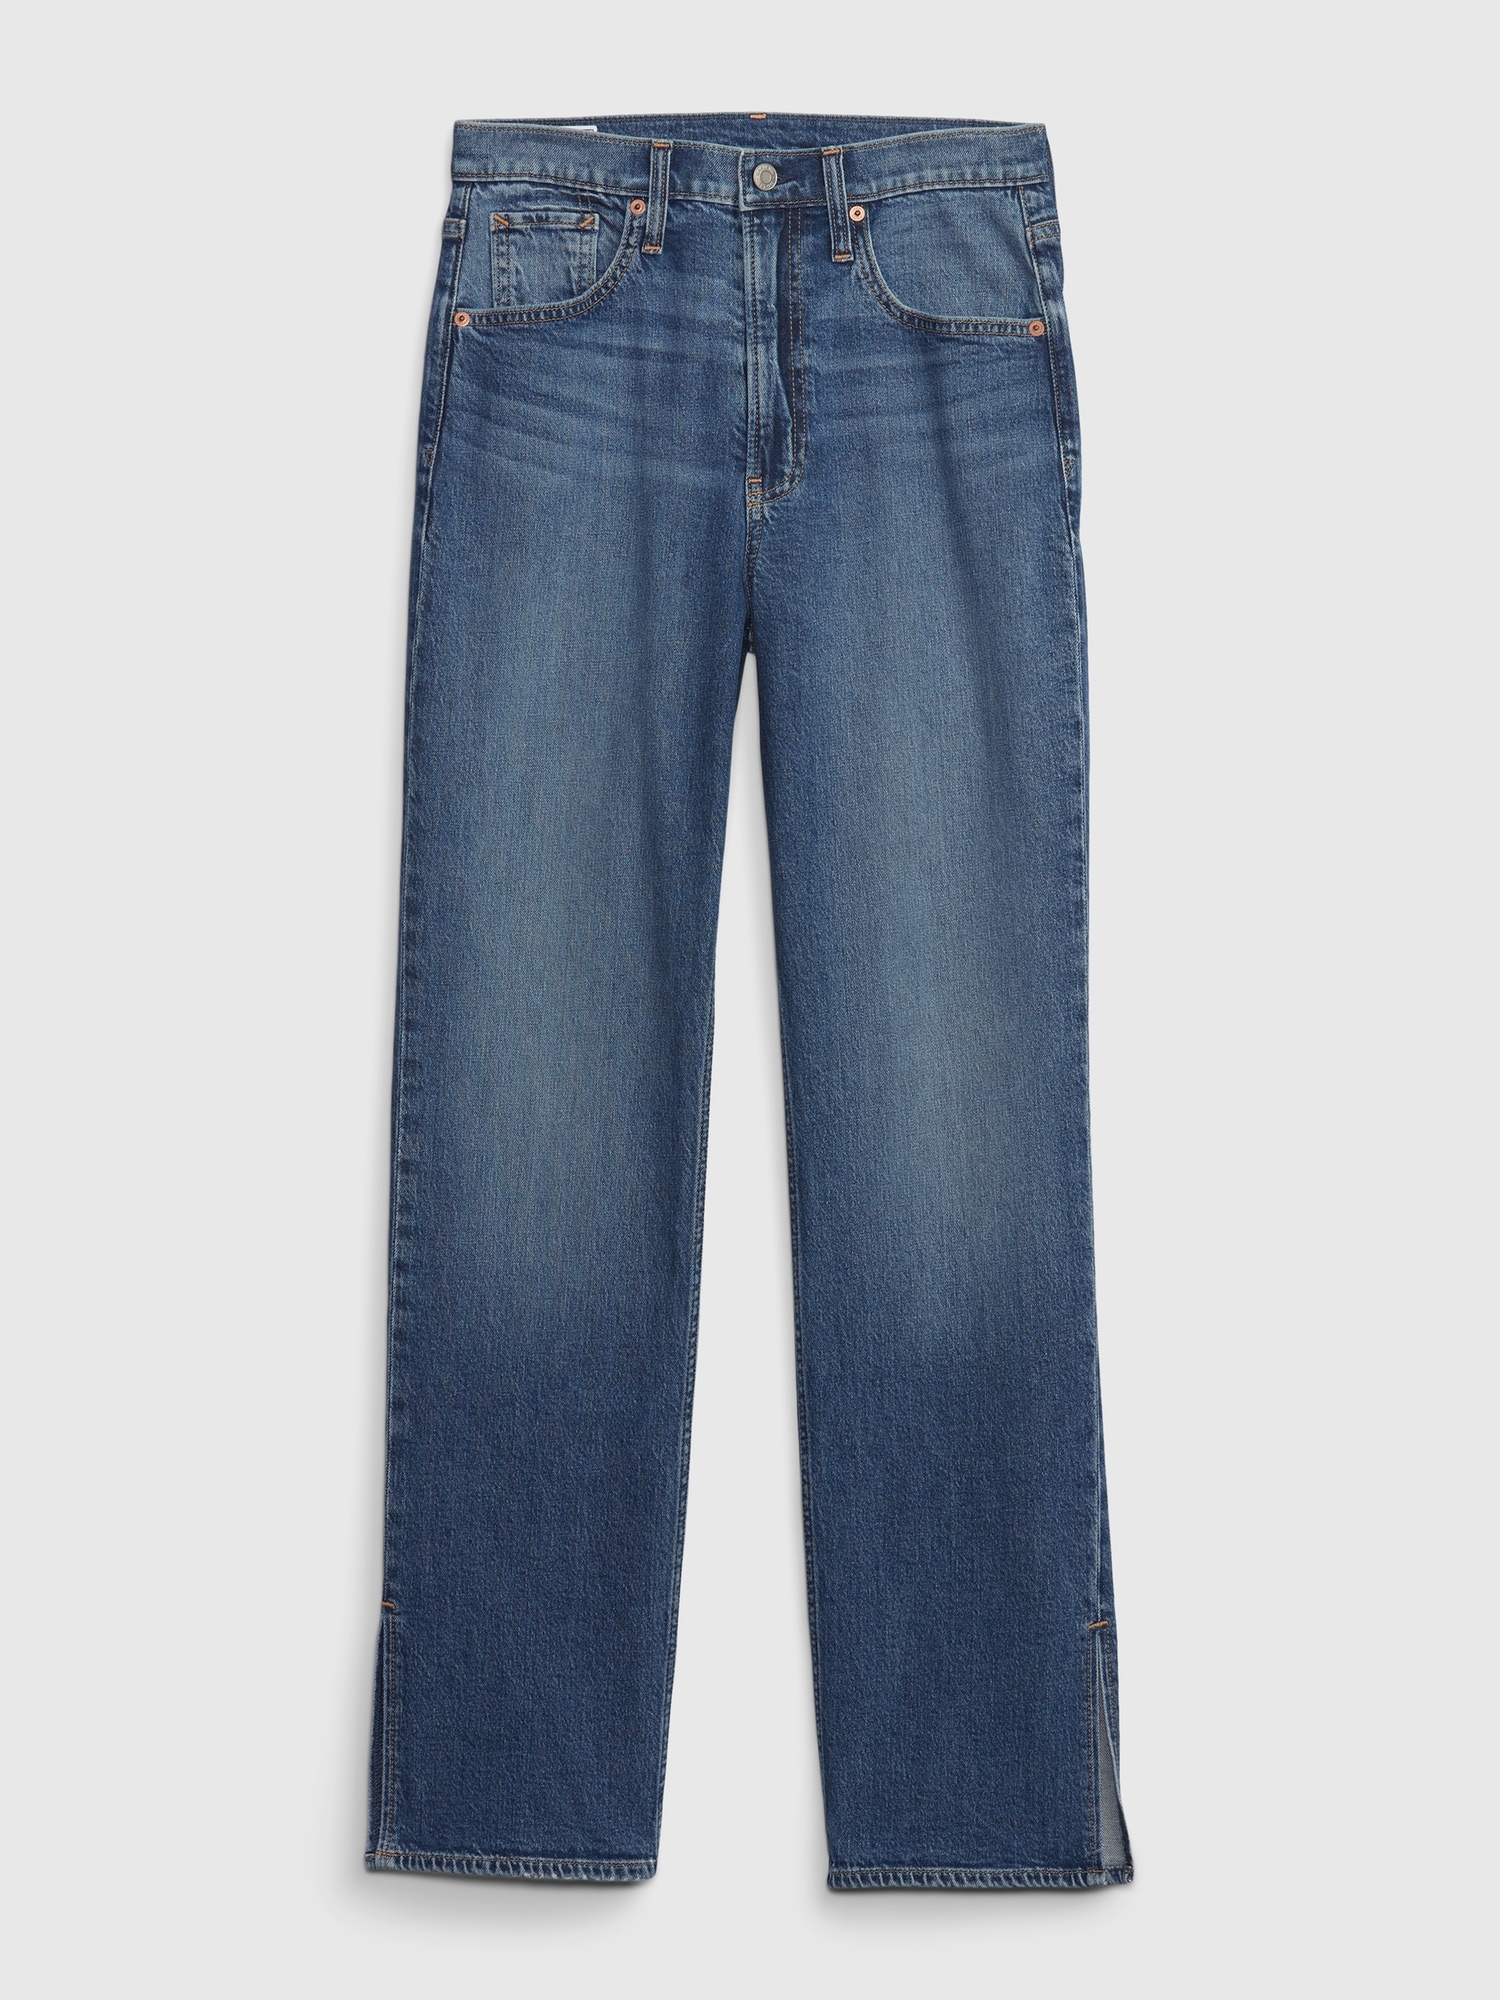 Men's Organic Cotton '90s Loose Jeans by Gap Dark Wash Size 34W